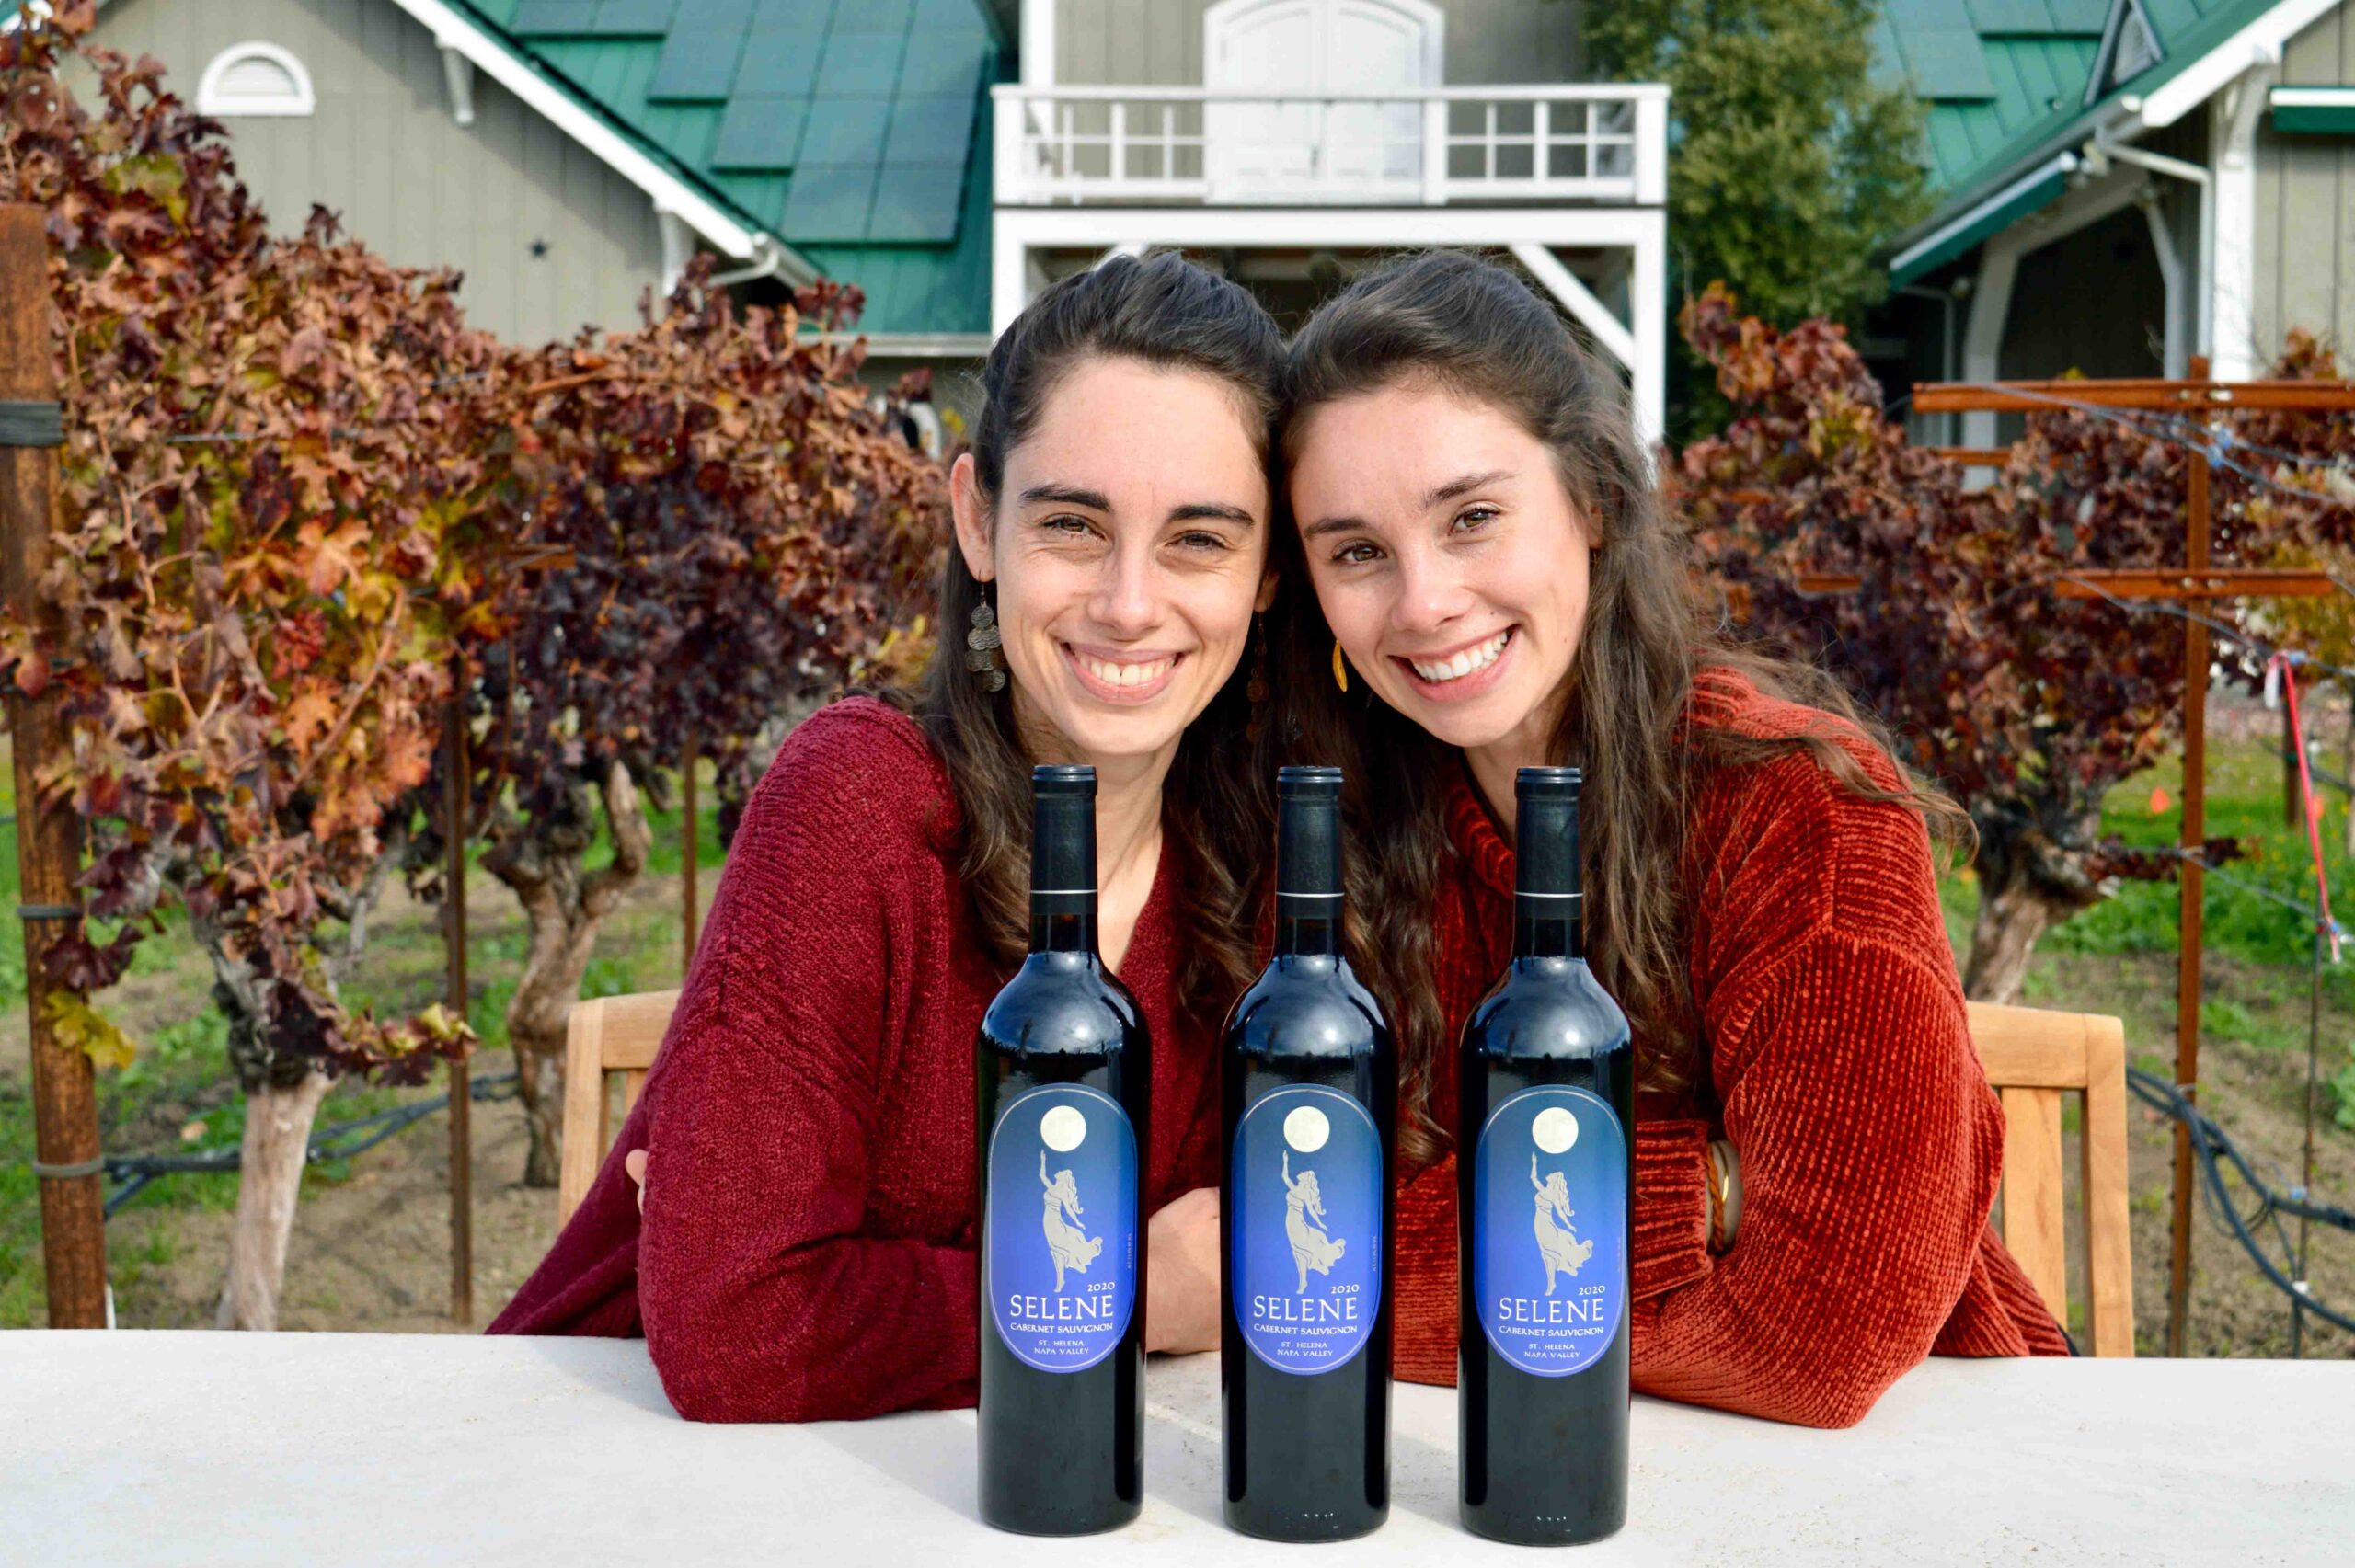 Rose and Grace Corison Martin presenting three bottles of the 2020 Selene Cabernet Sauvignon.